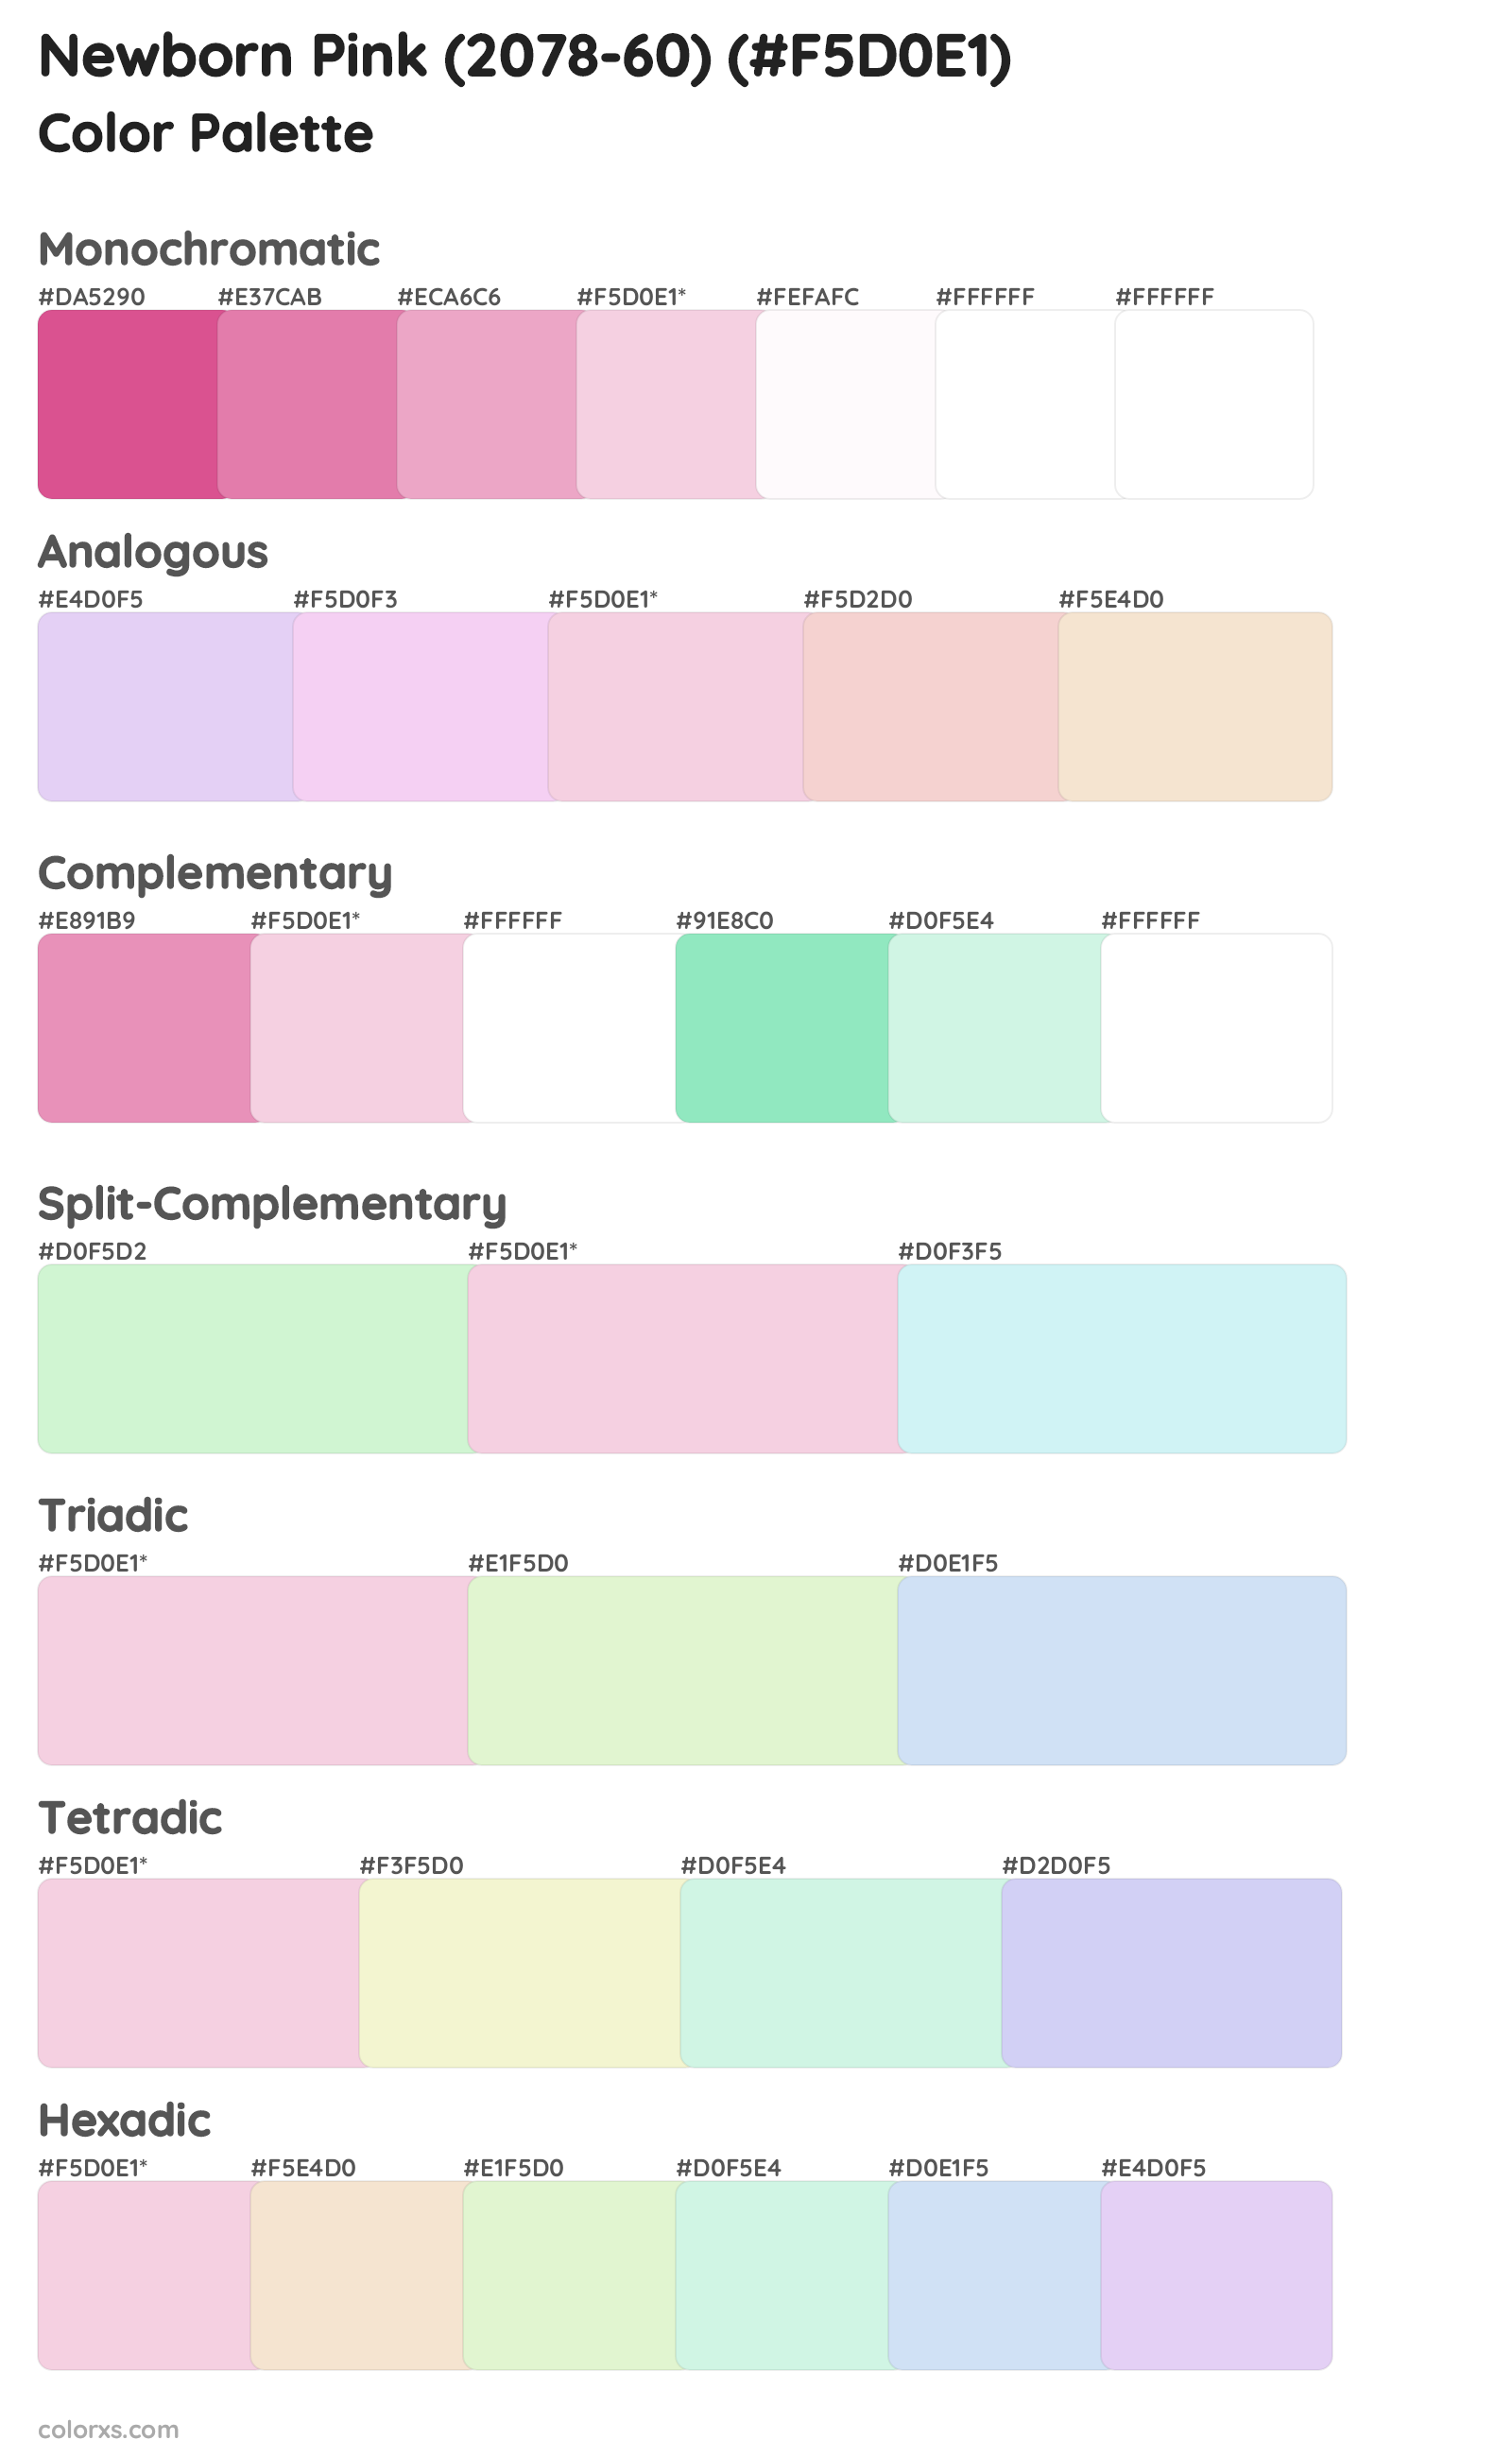 Newborn Pink (2078-60) Color Scheme Palettes